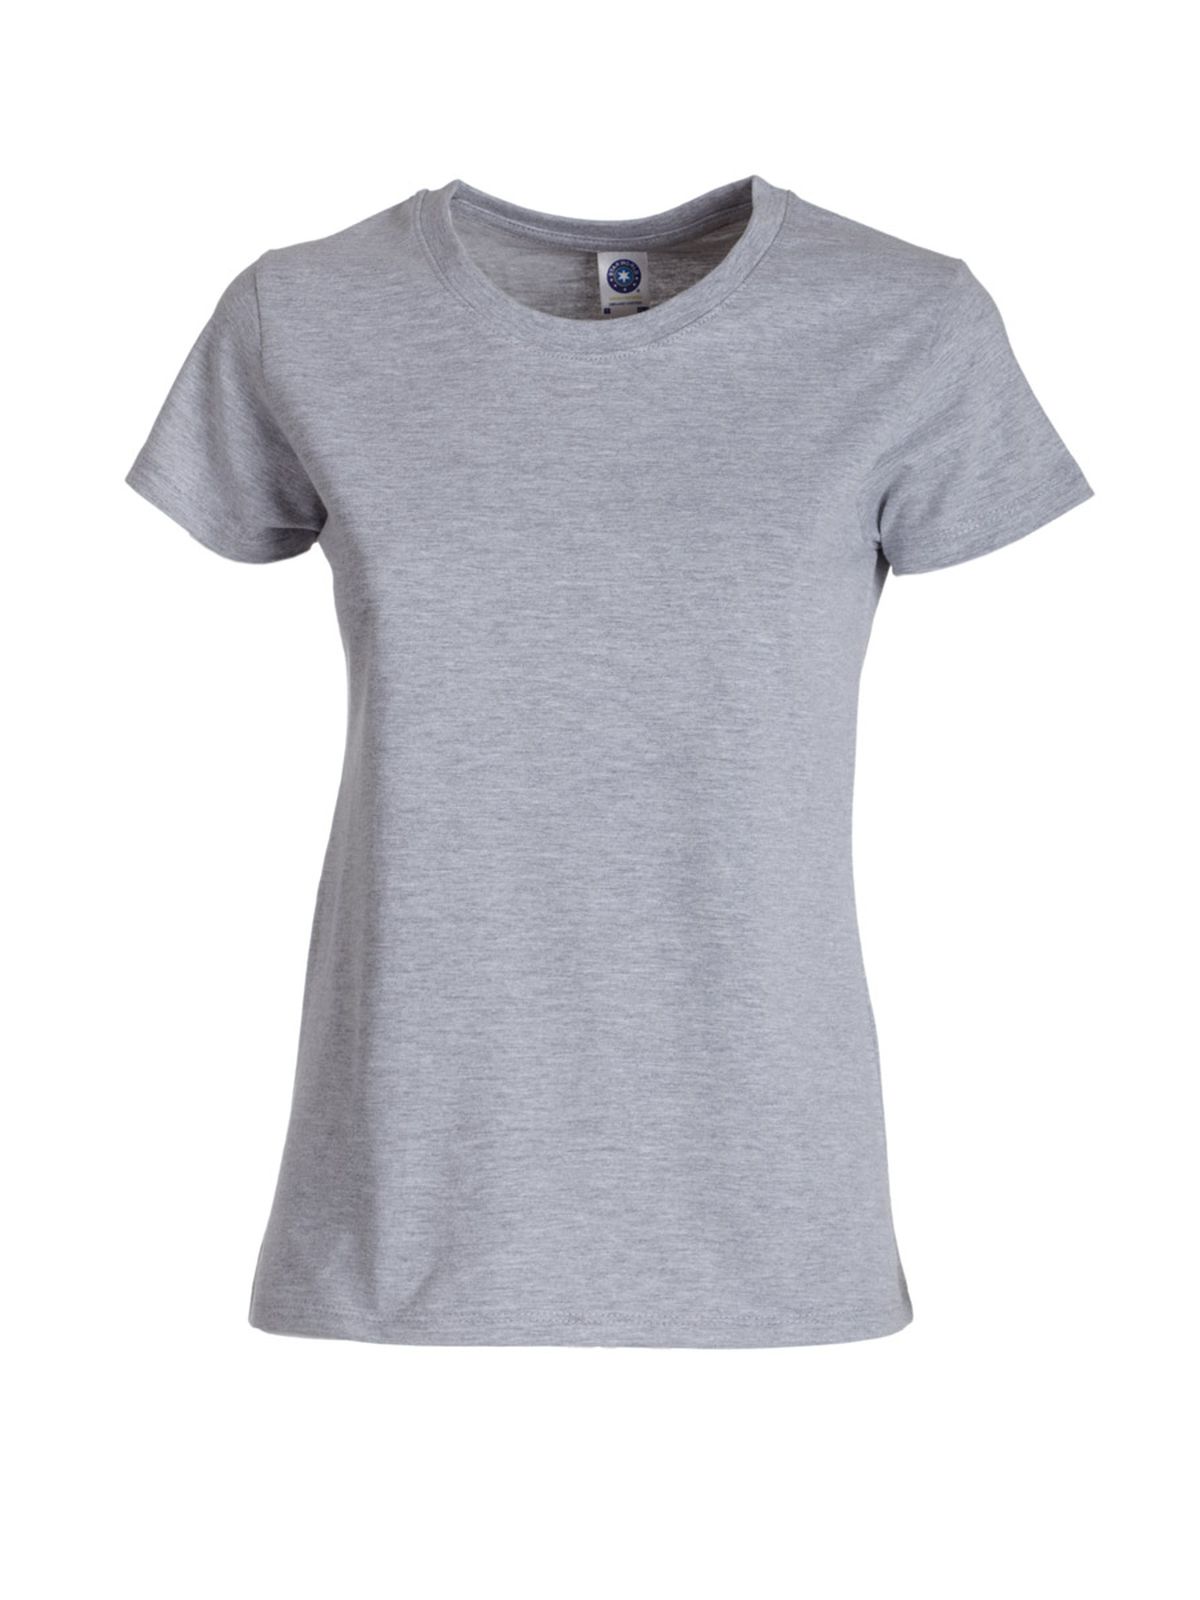 gold-label-ladies-retail-t-shirt-heather-grey.webp